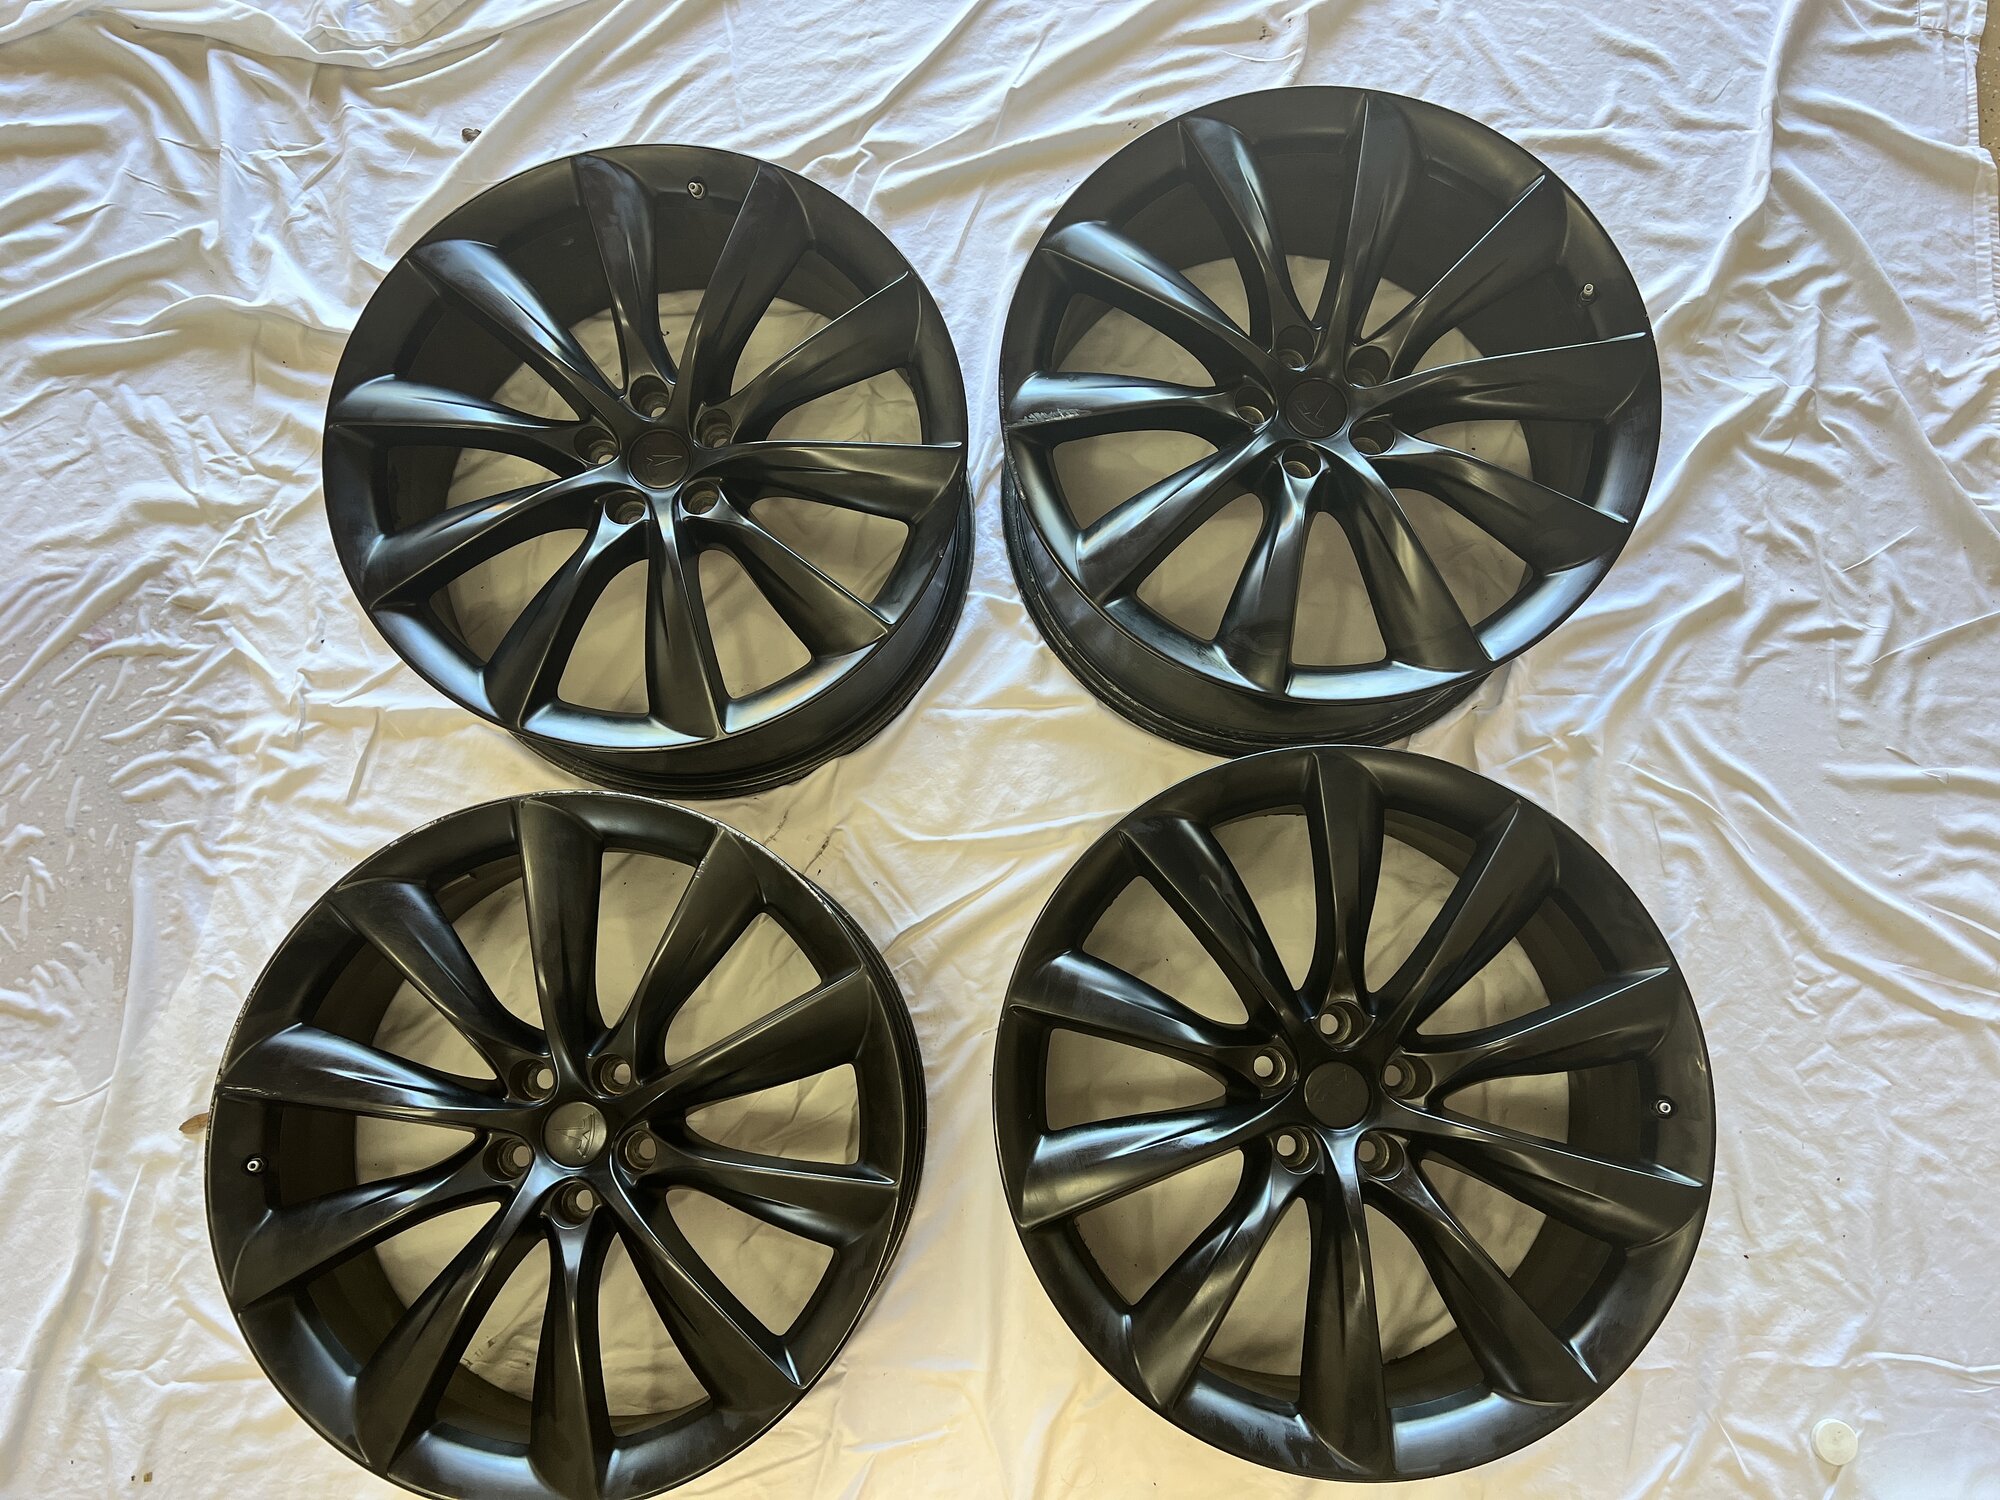 Model X 22” Black Onyx Wheels | Tesla Motors Club